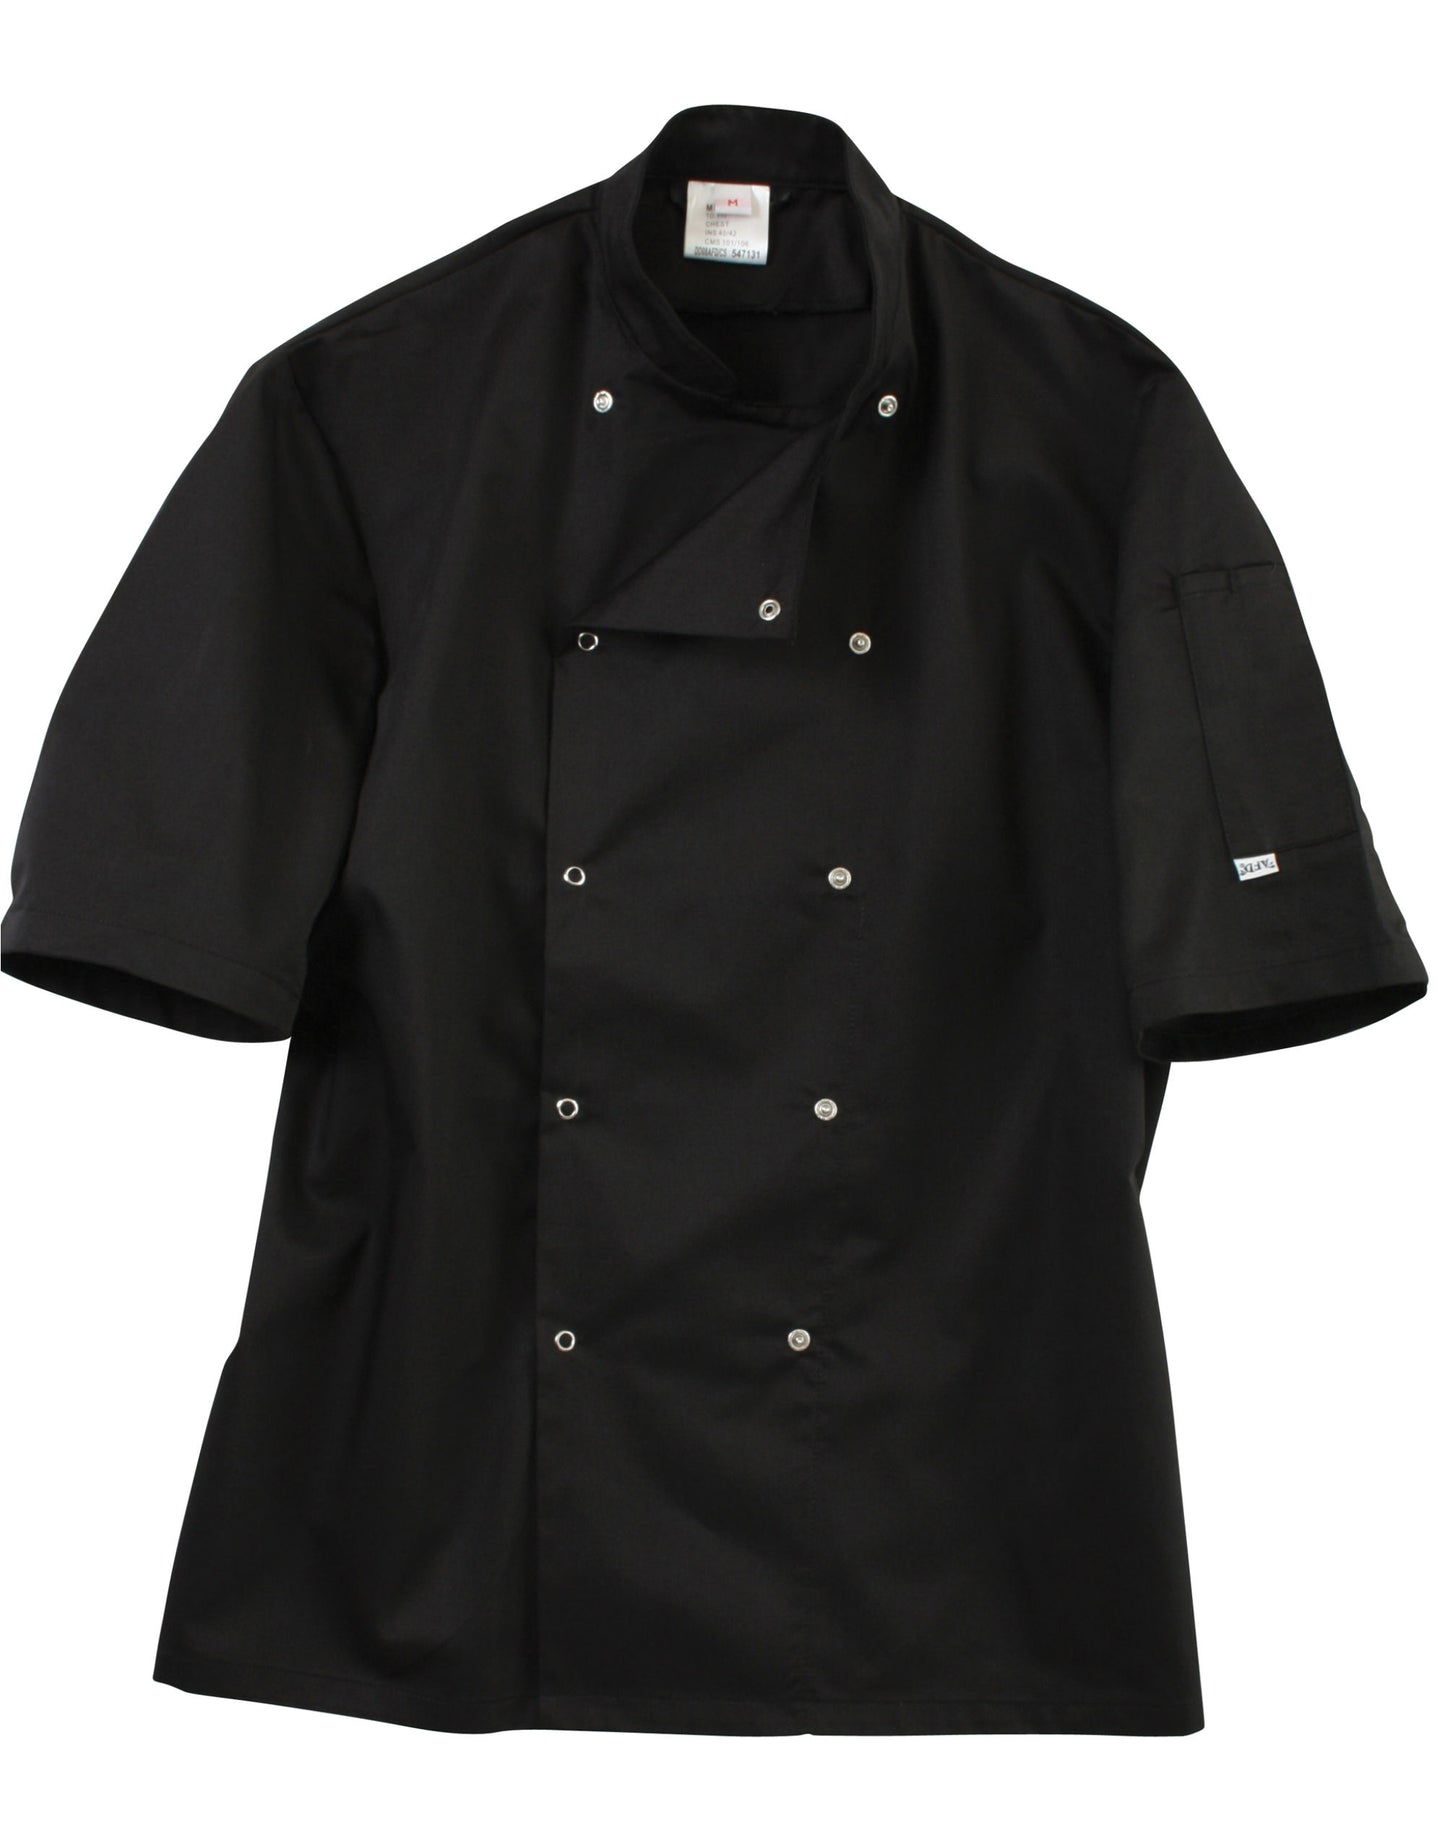 Dennys Short Sleeve Chef's Jacket